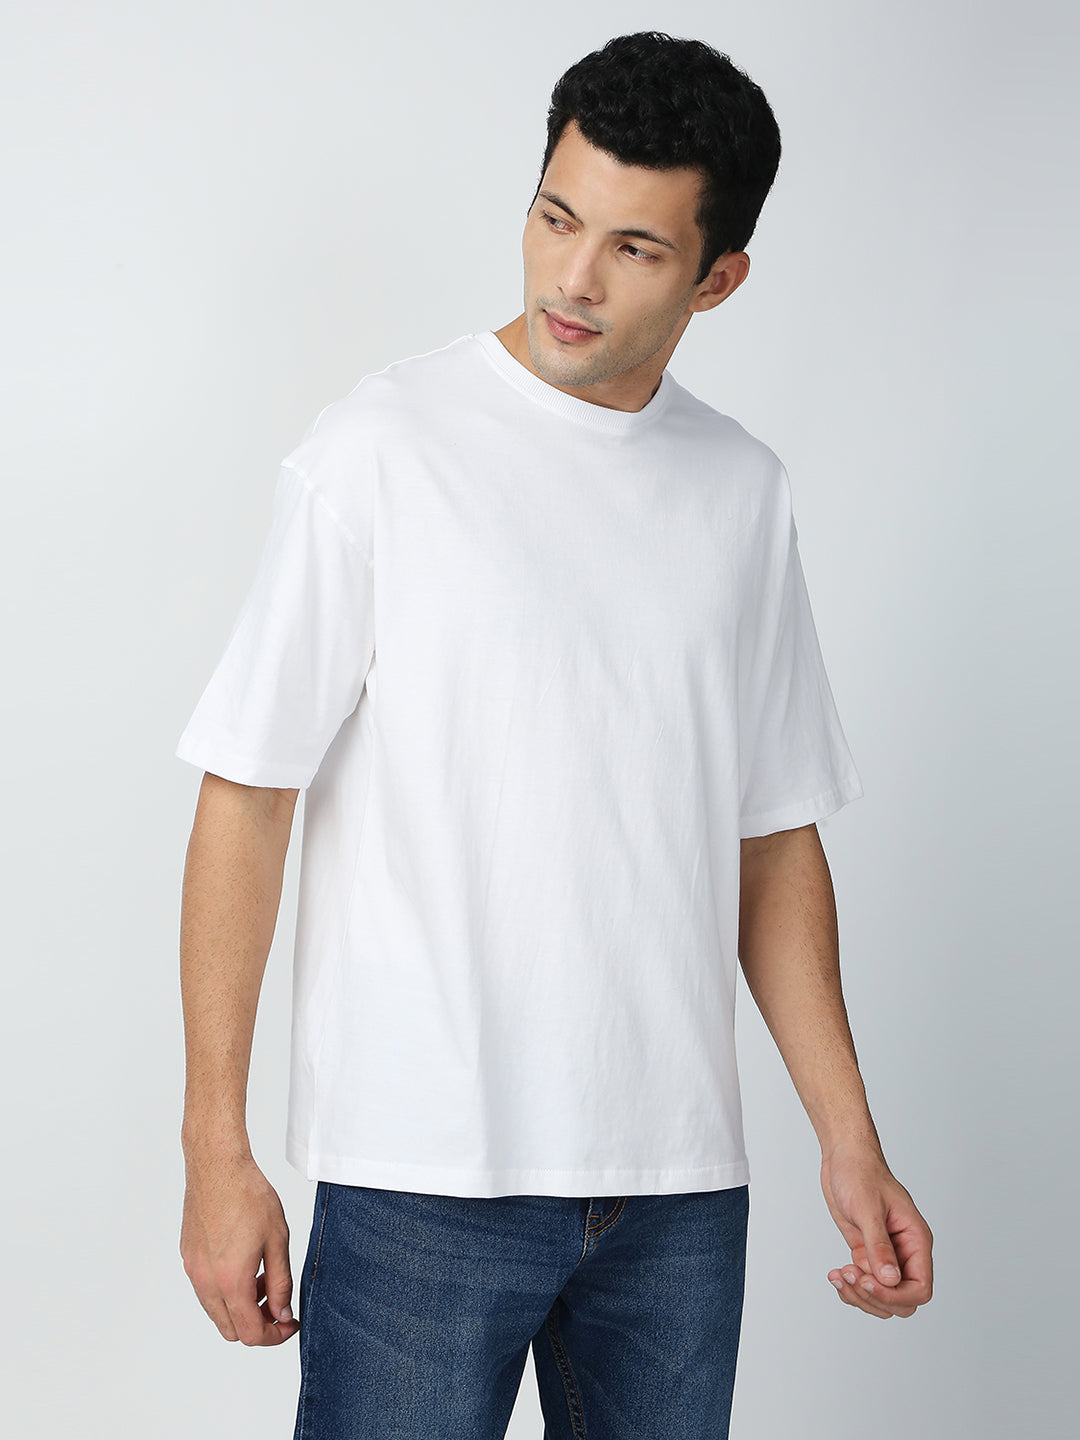 Buy Blamblack Men's Stylish Baggy White Color Back Printed Round Neck T-Shirt